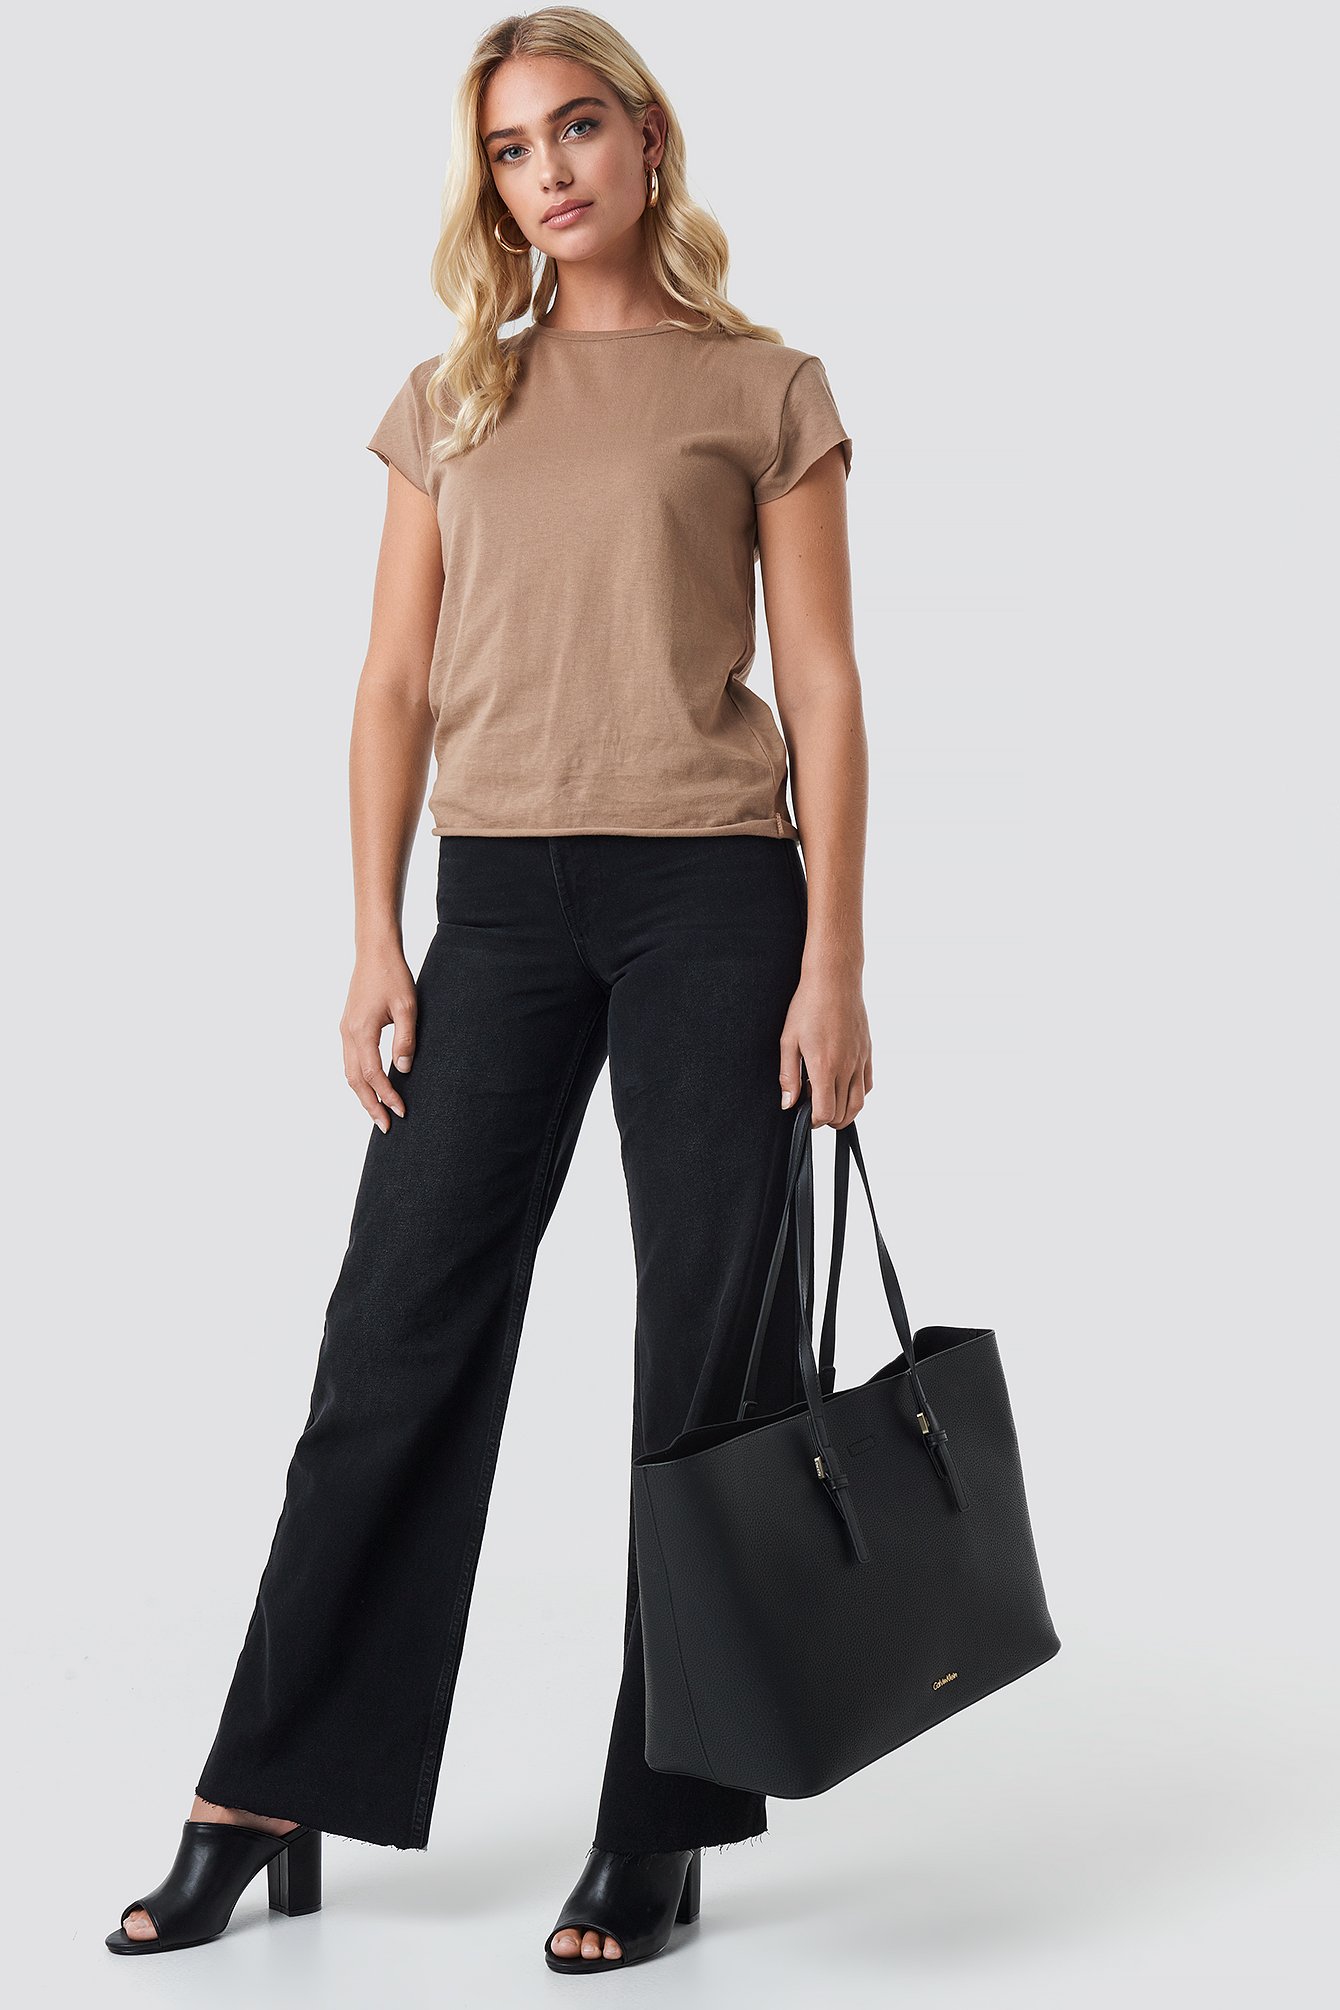 Calvin Klein Bag In Bag Discount, SAVE 55%.